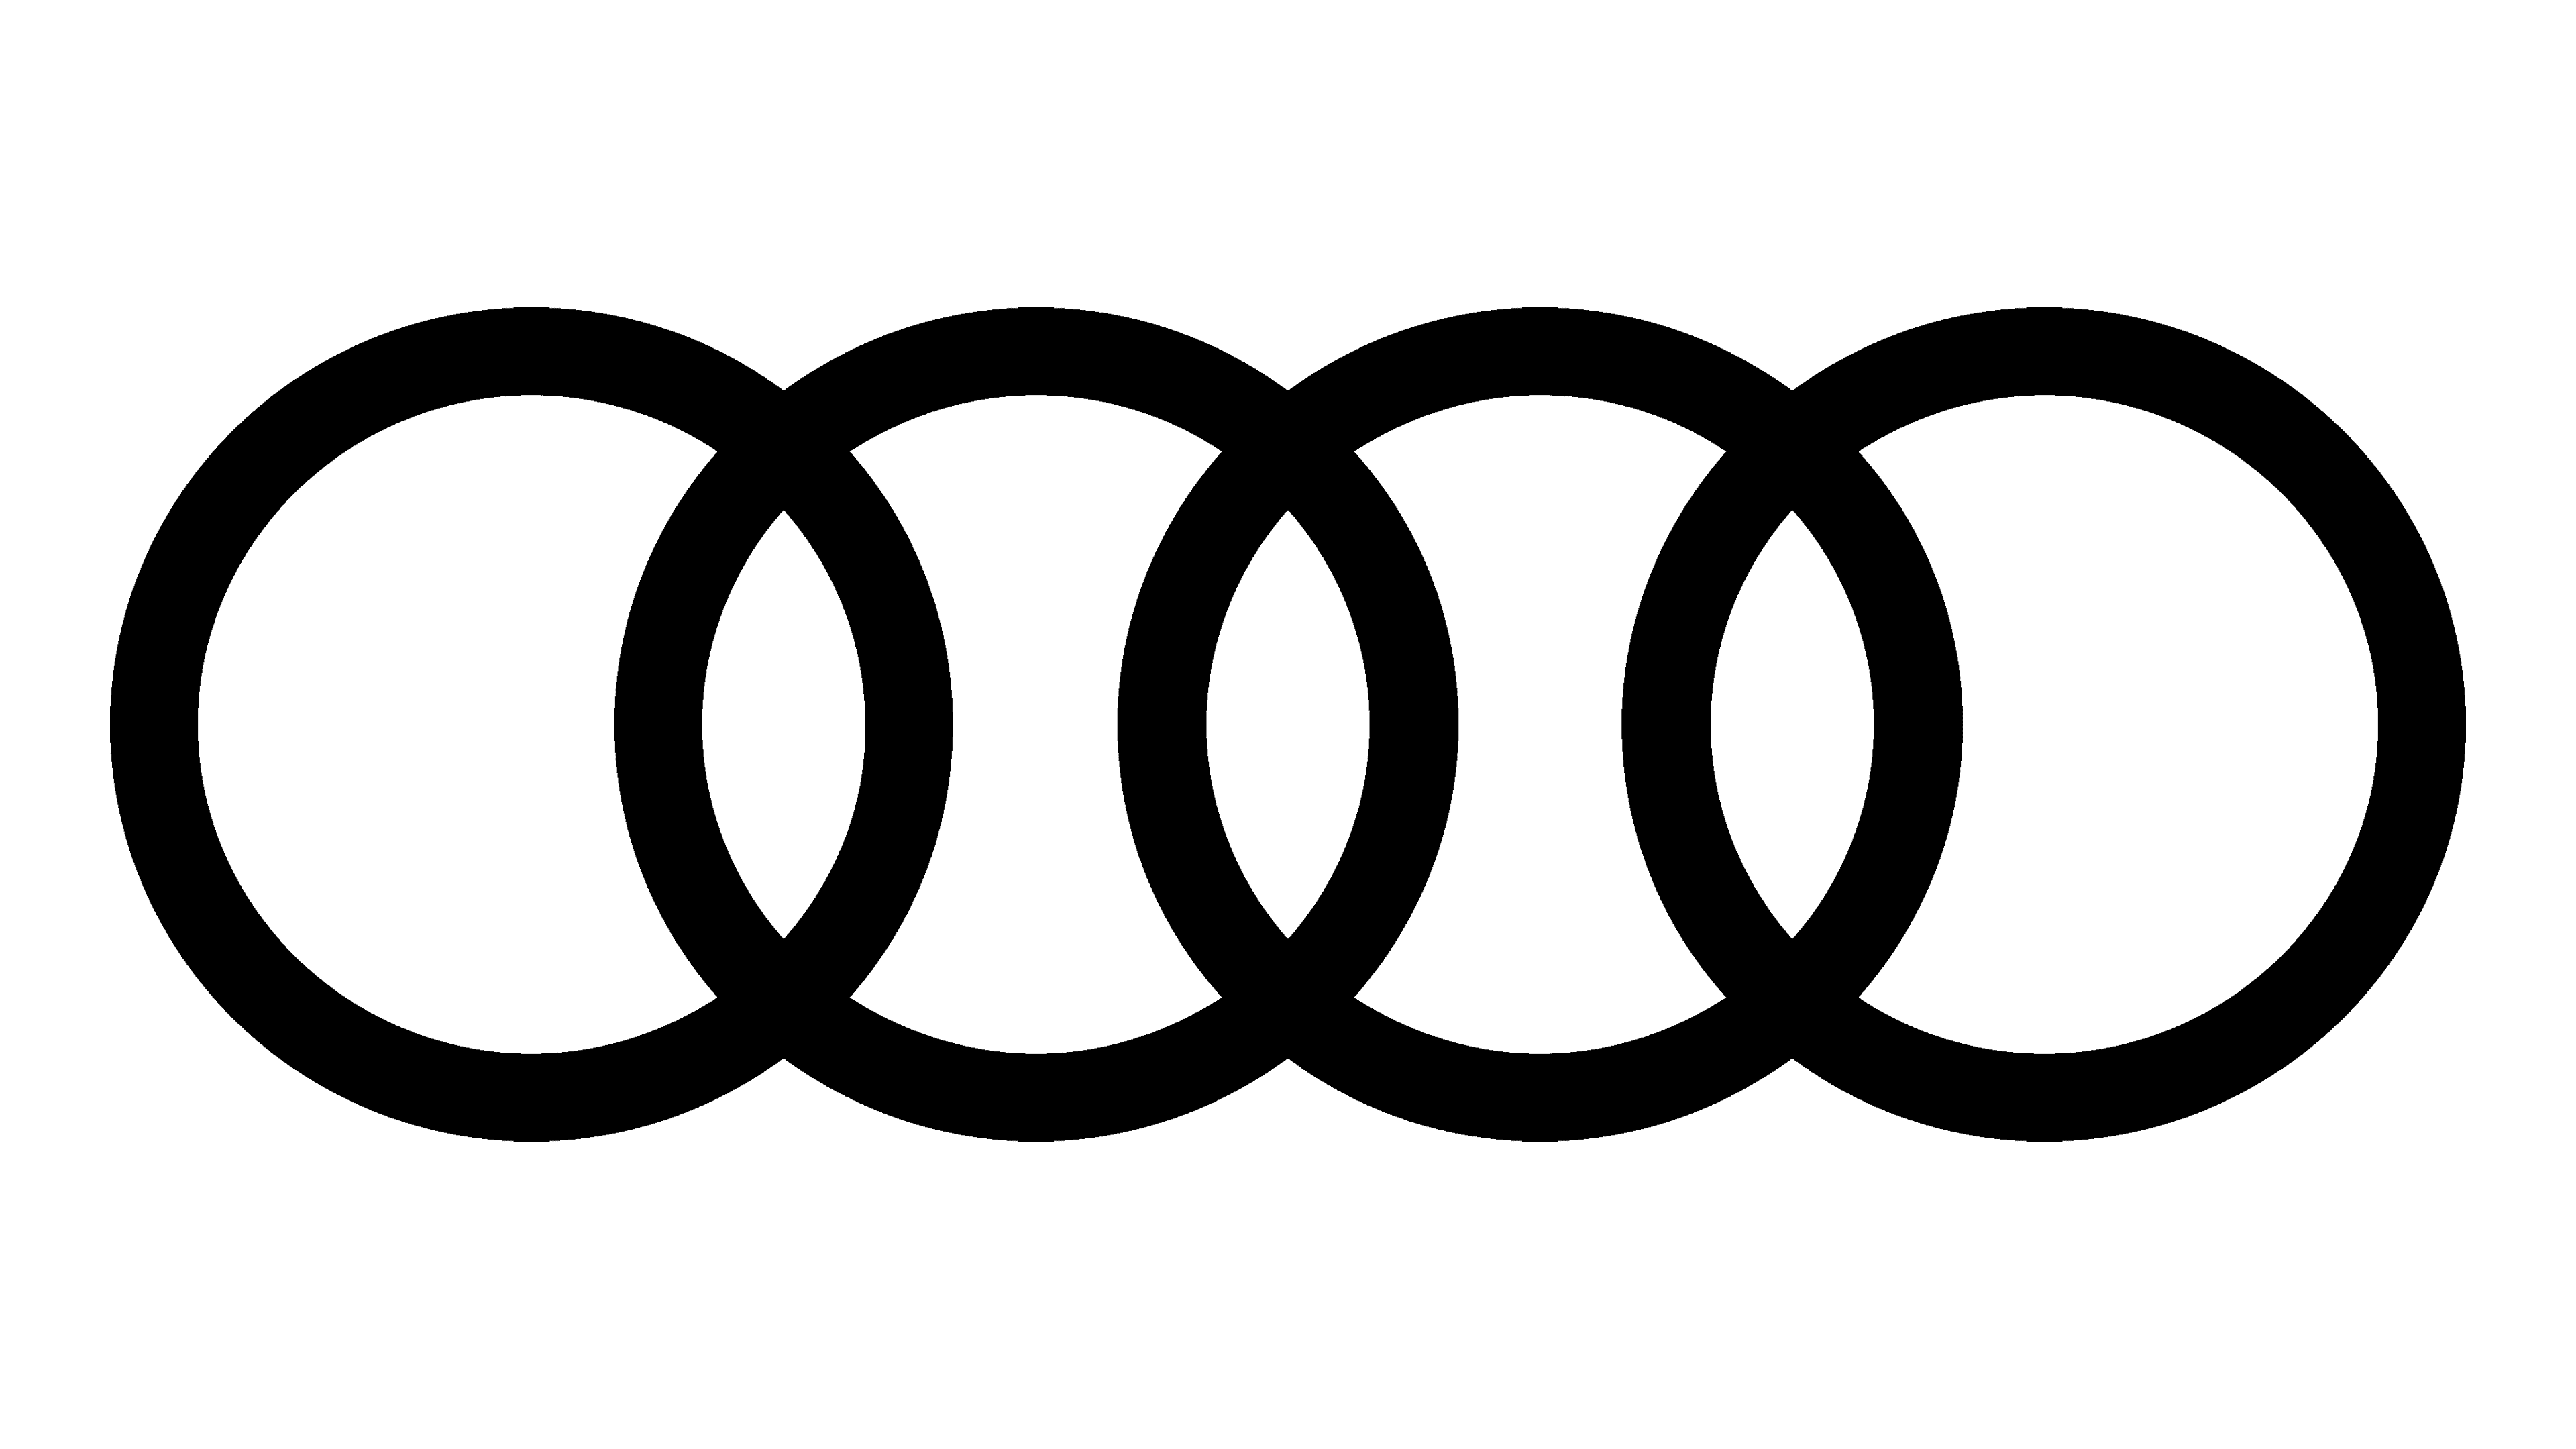 german car brand logos